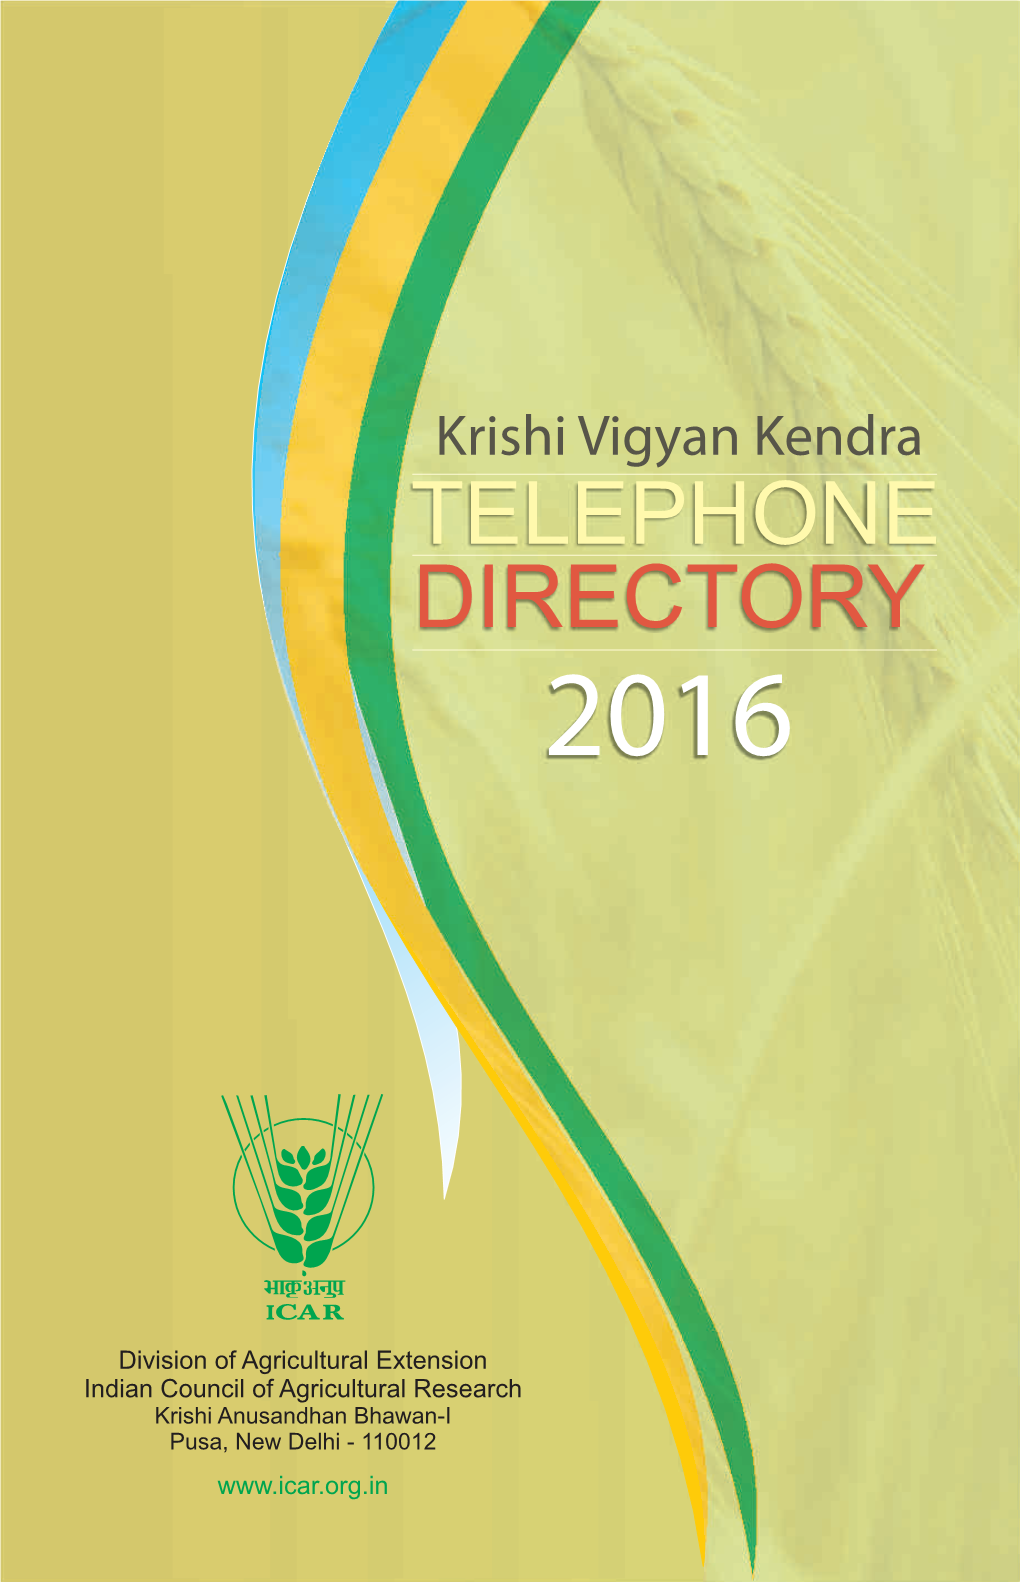 KVK-Telephone Directory 2016 1 S